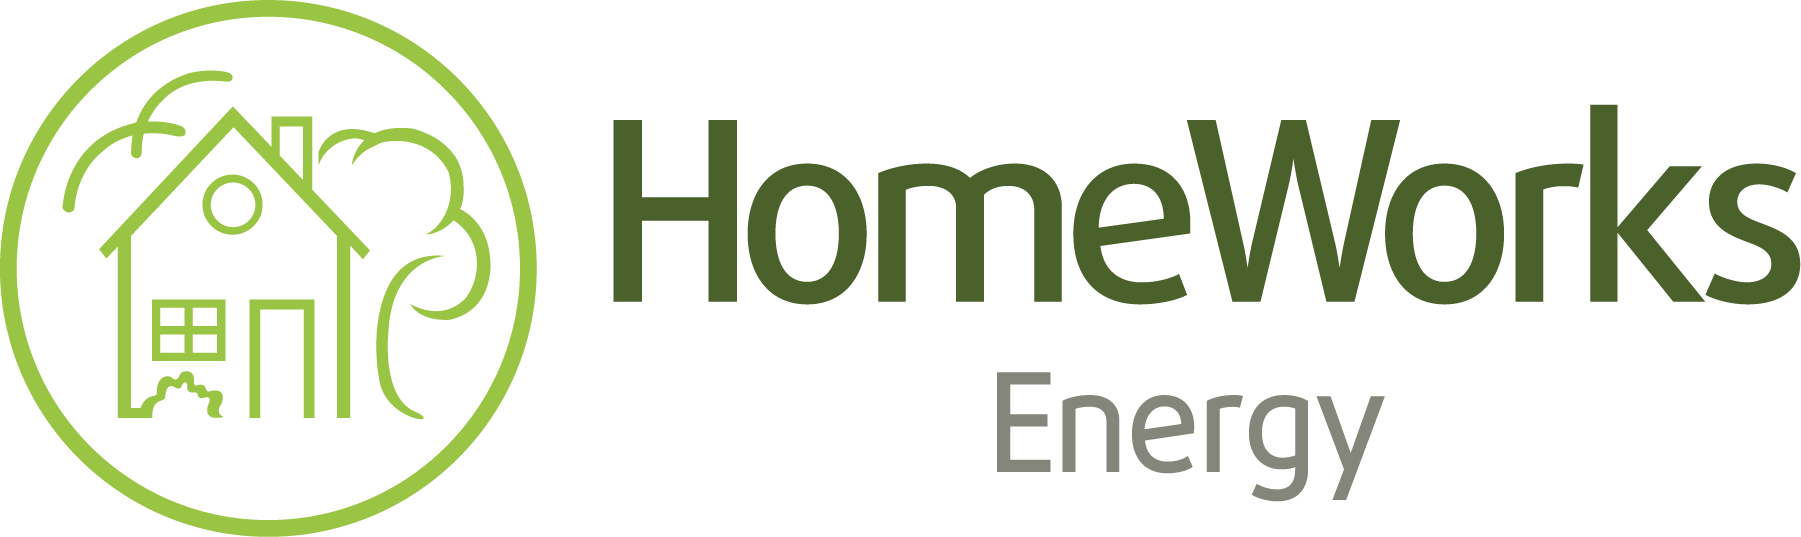 http university homeworks energy com login